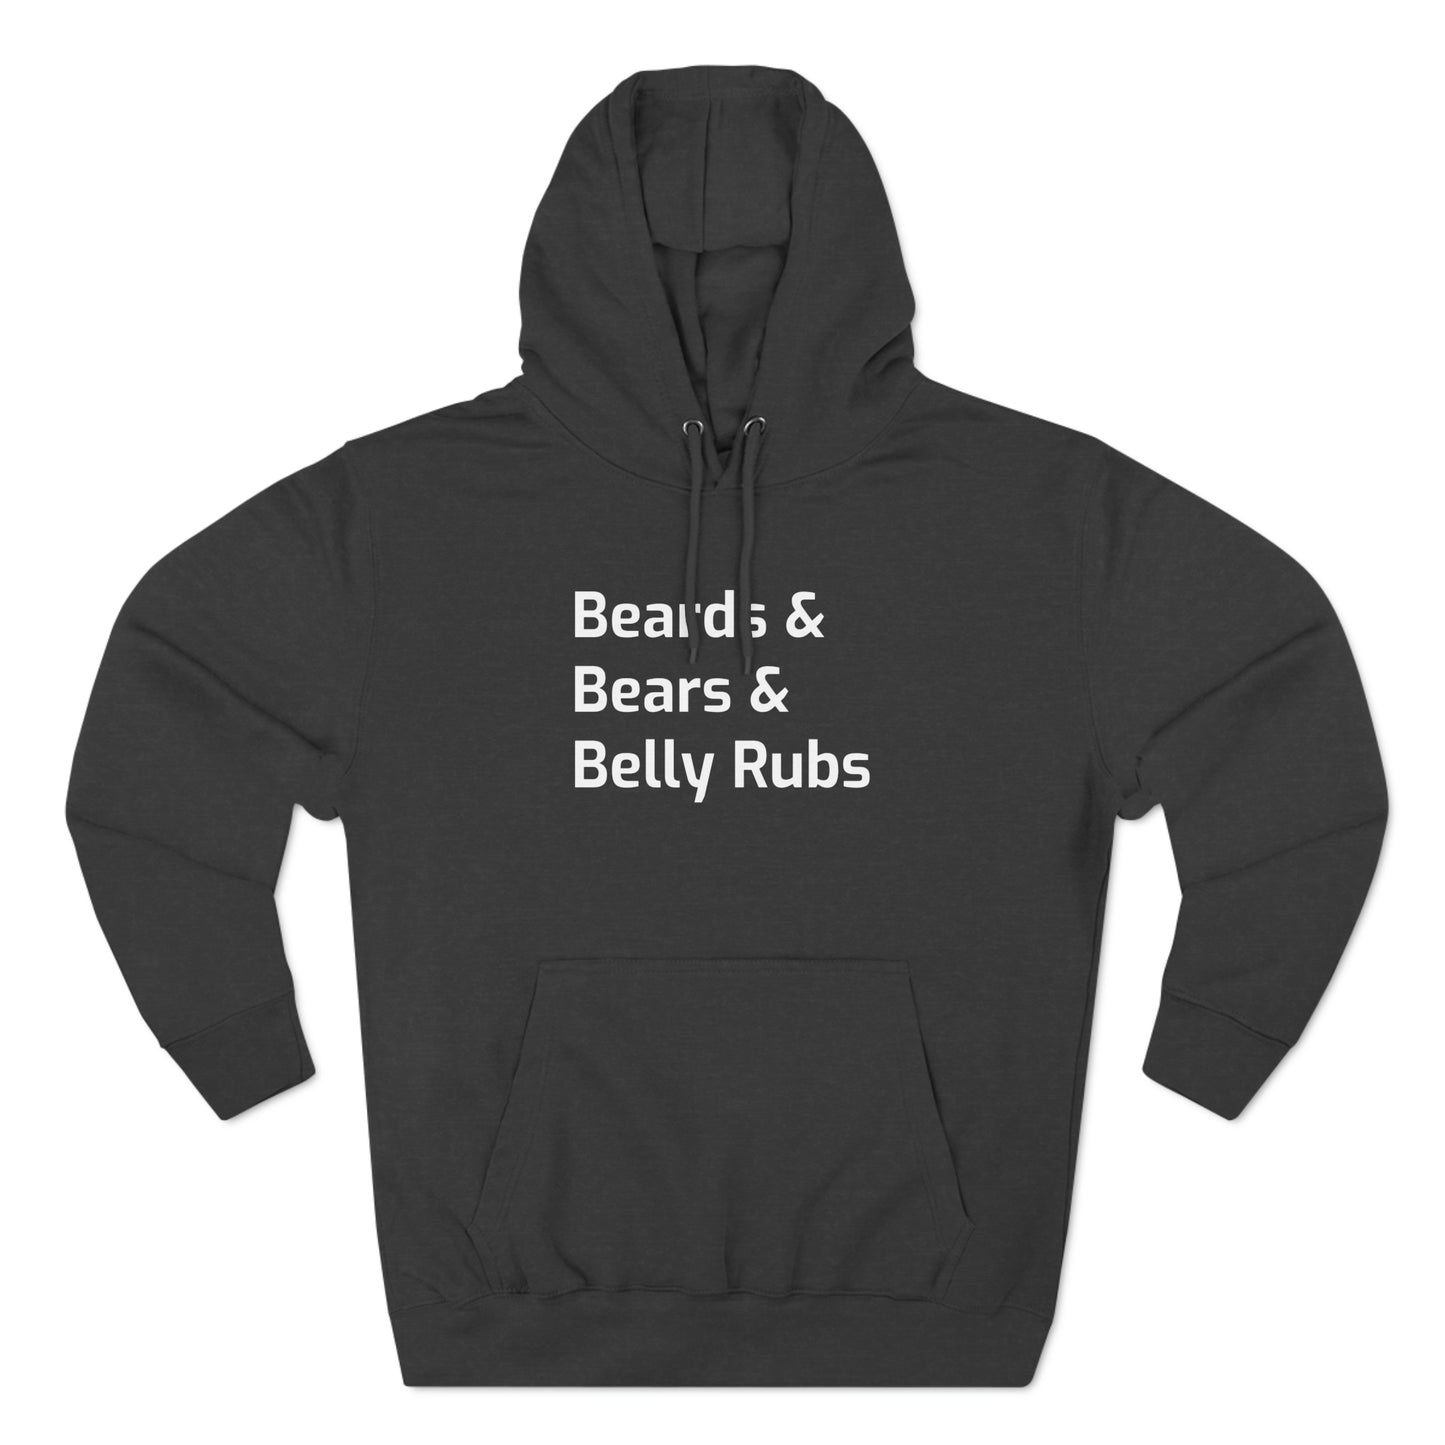 Beards & Bears & Belly Rubs